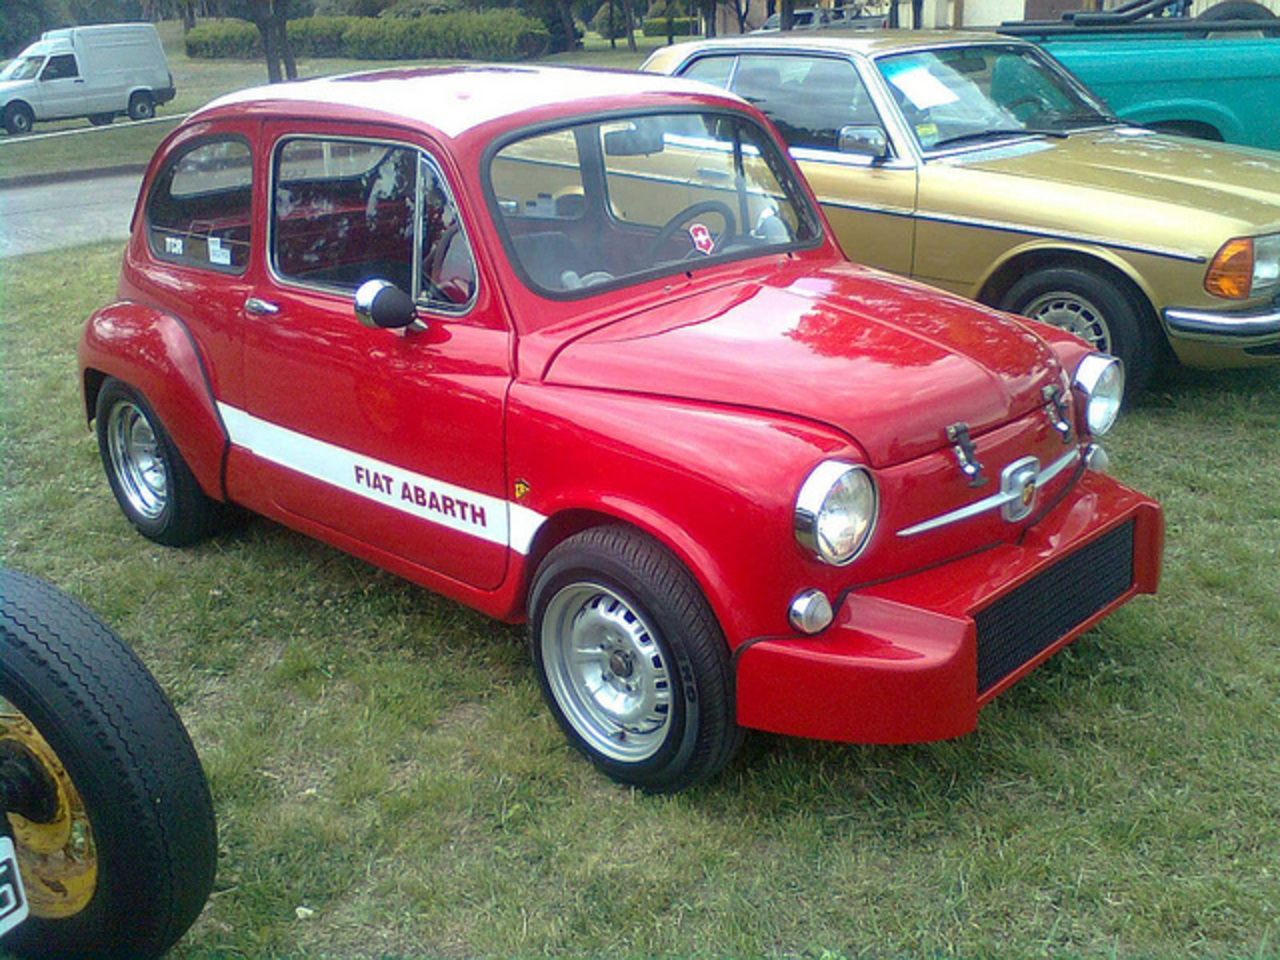 Fiat Abarth 600 | Flickr - Photo Sharing!